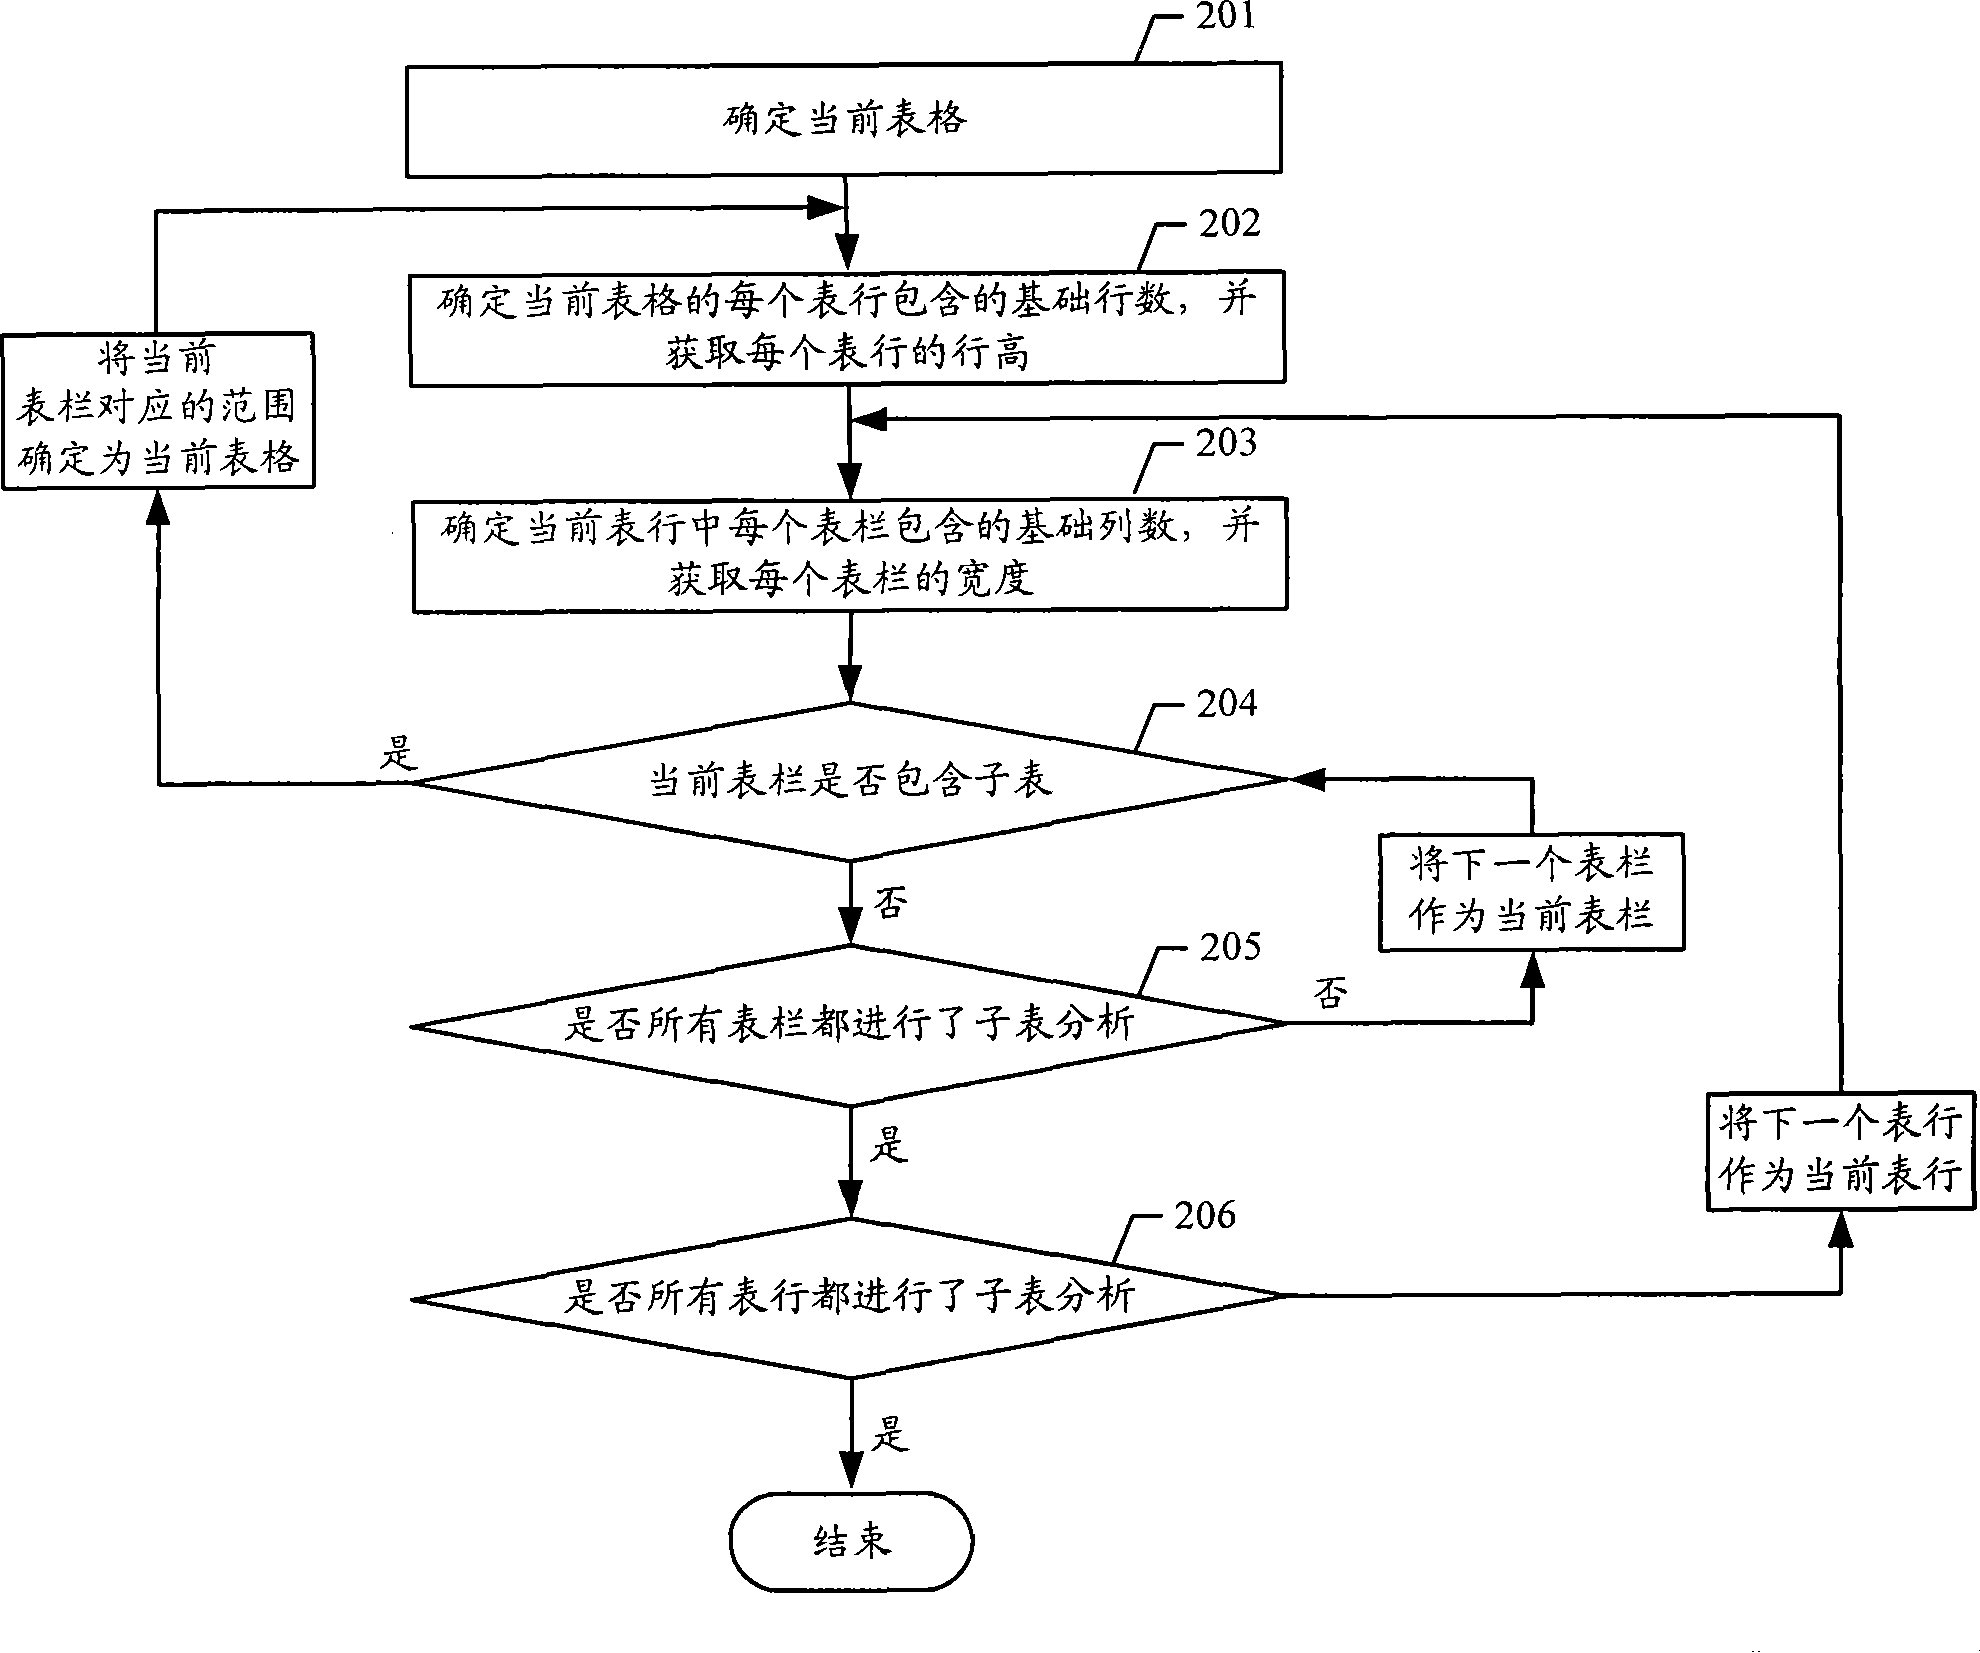 Method and apparatus for converting form describing mode